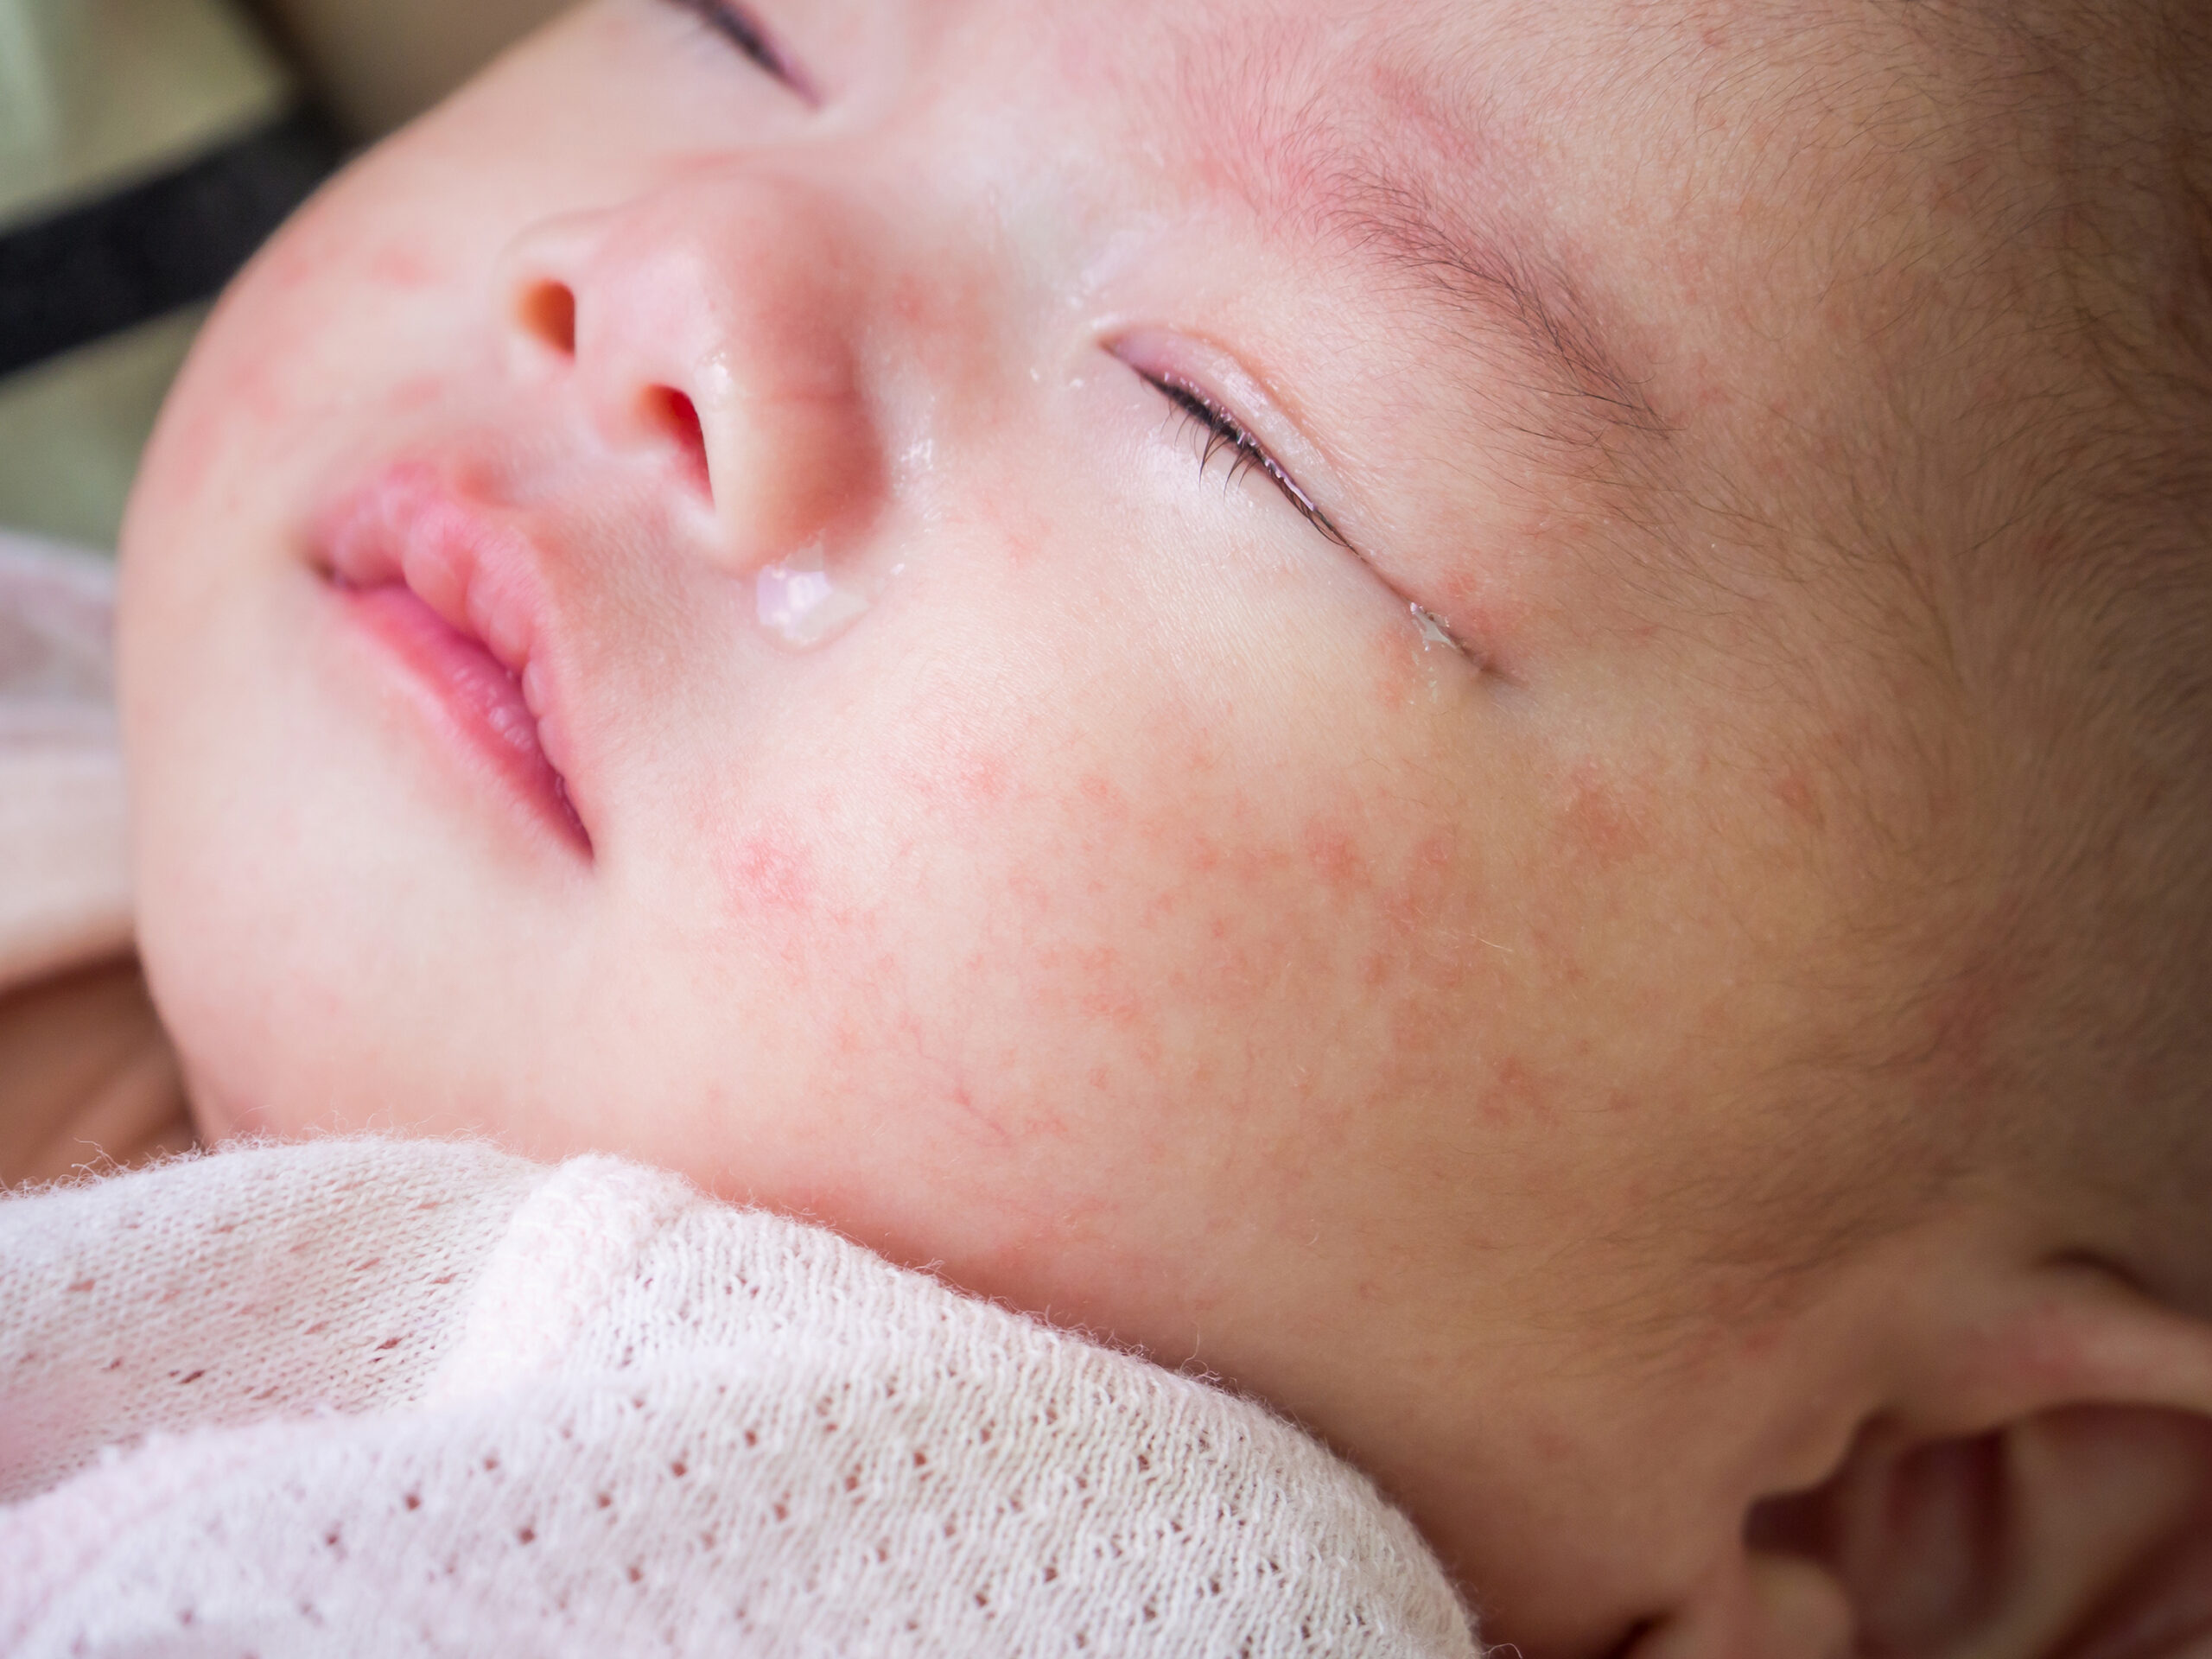 D'Aura newborn baby with dermatitis allergy face scaled